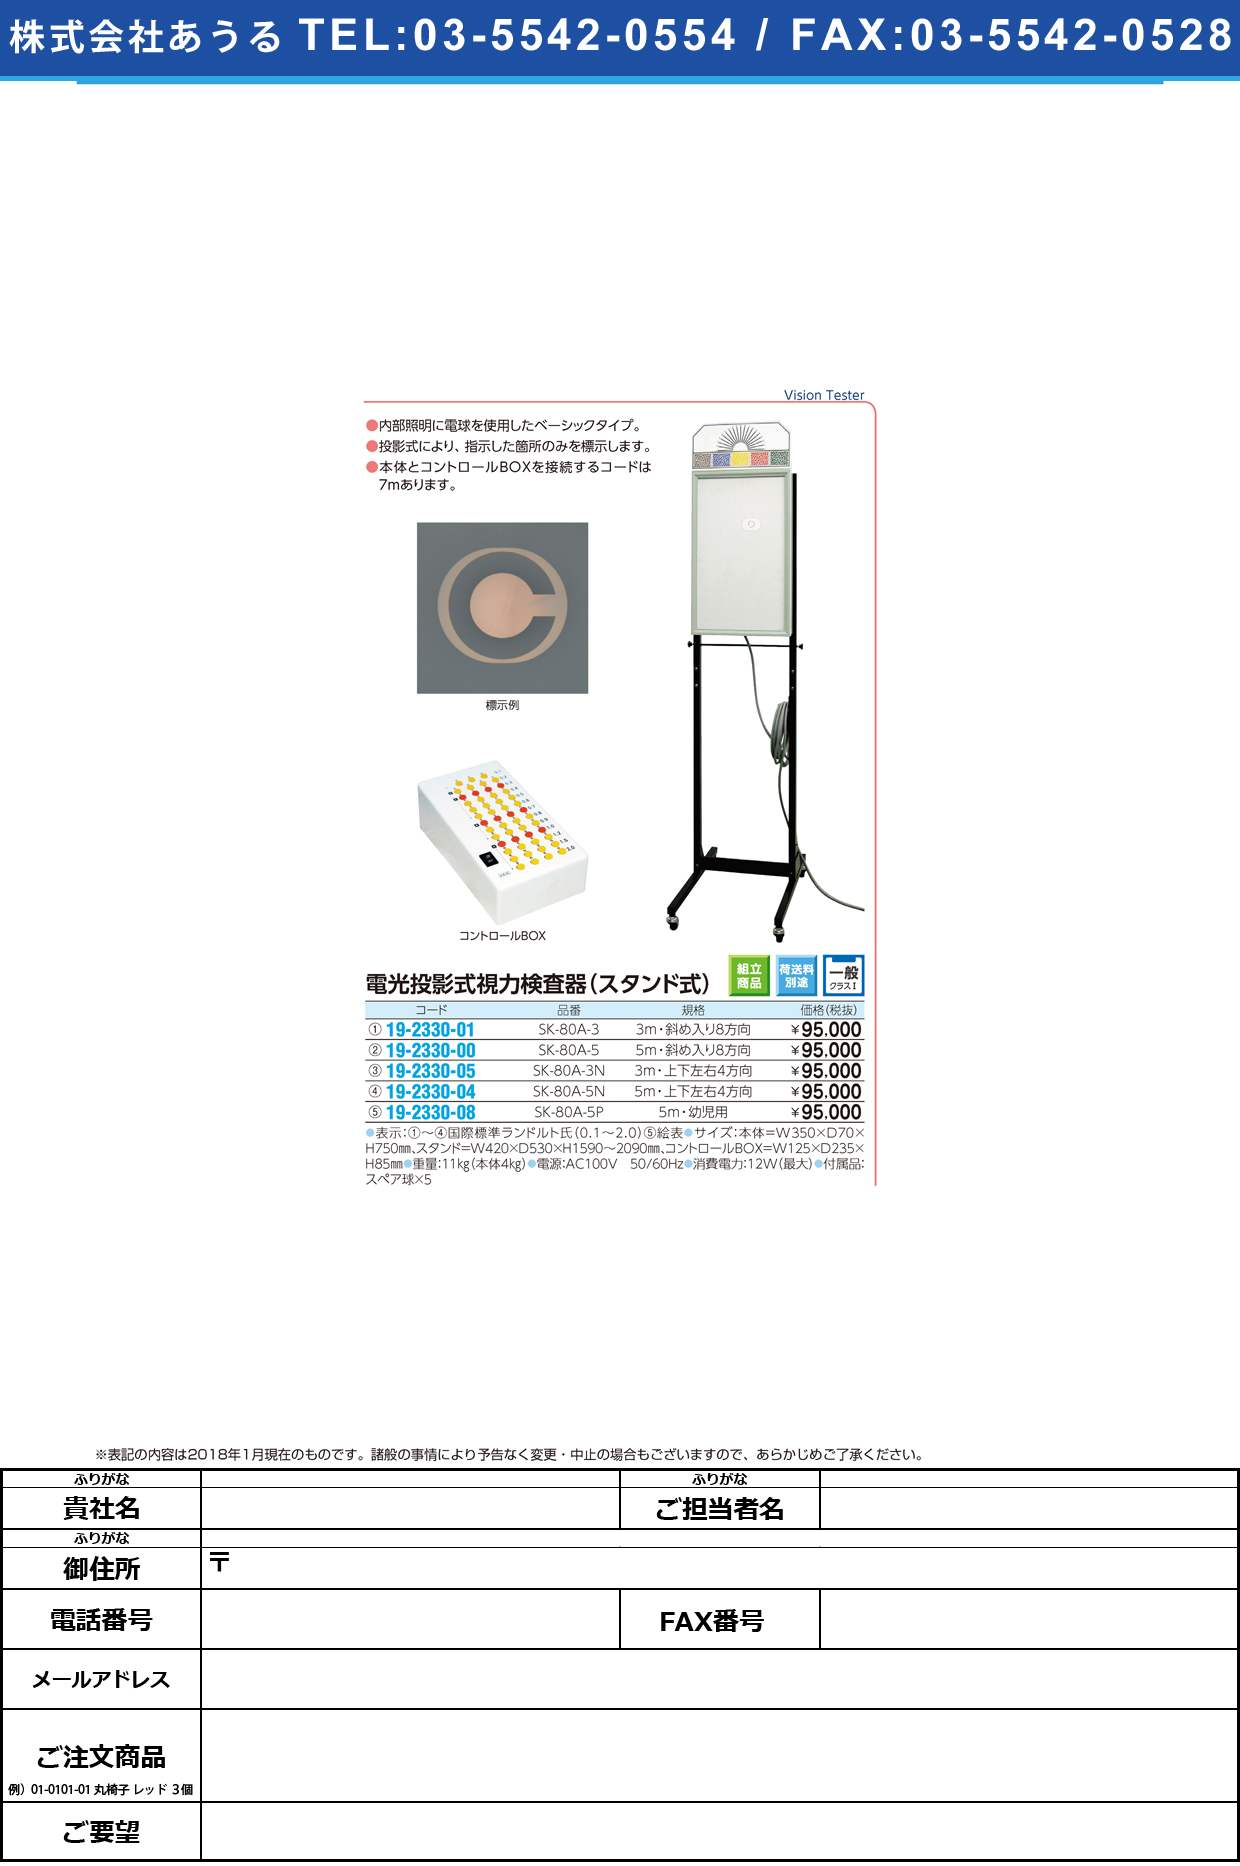 (19-2330-00)電光投影式視力検査器スタンド式５ｍ SK-80A-5(8ﾎｳｺｳ) ﾃﾞﾝｺｳｼﾘｮｸｹﾝｻｷｽﾀﾝﾄﾞ5M【1台単位】【2018年カタログ商品】